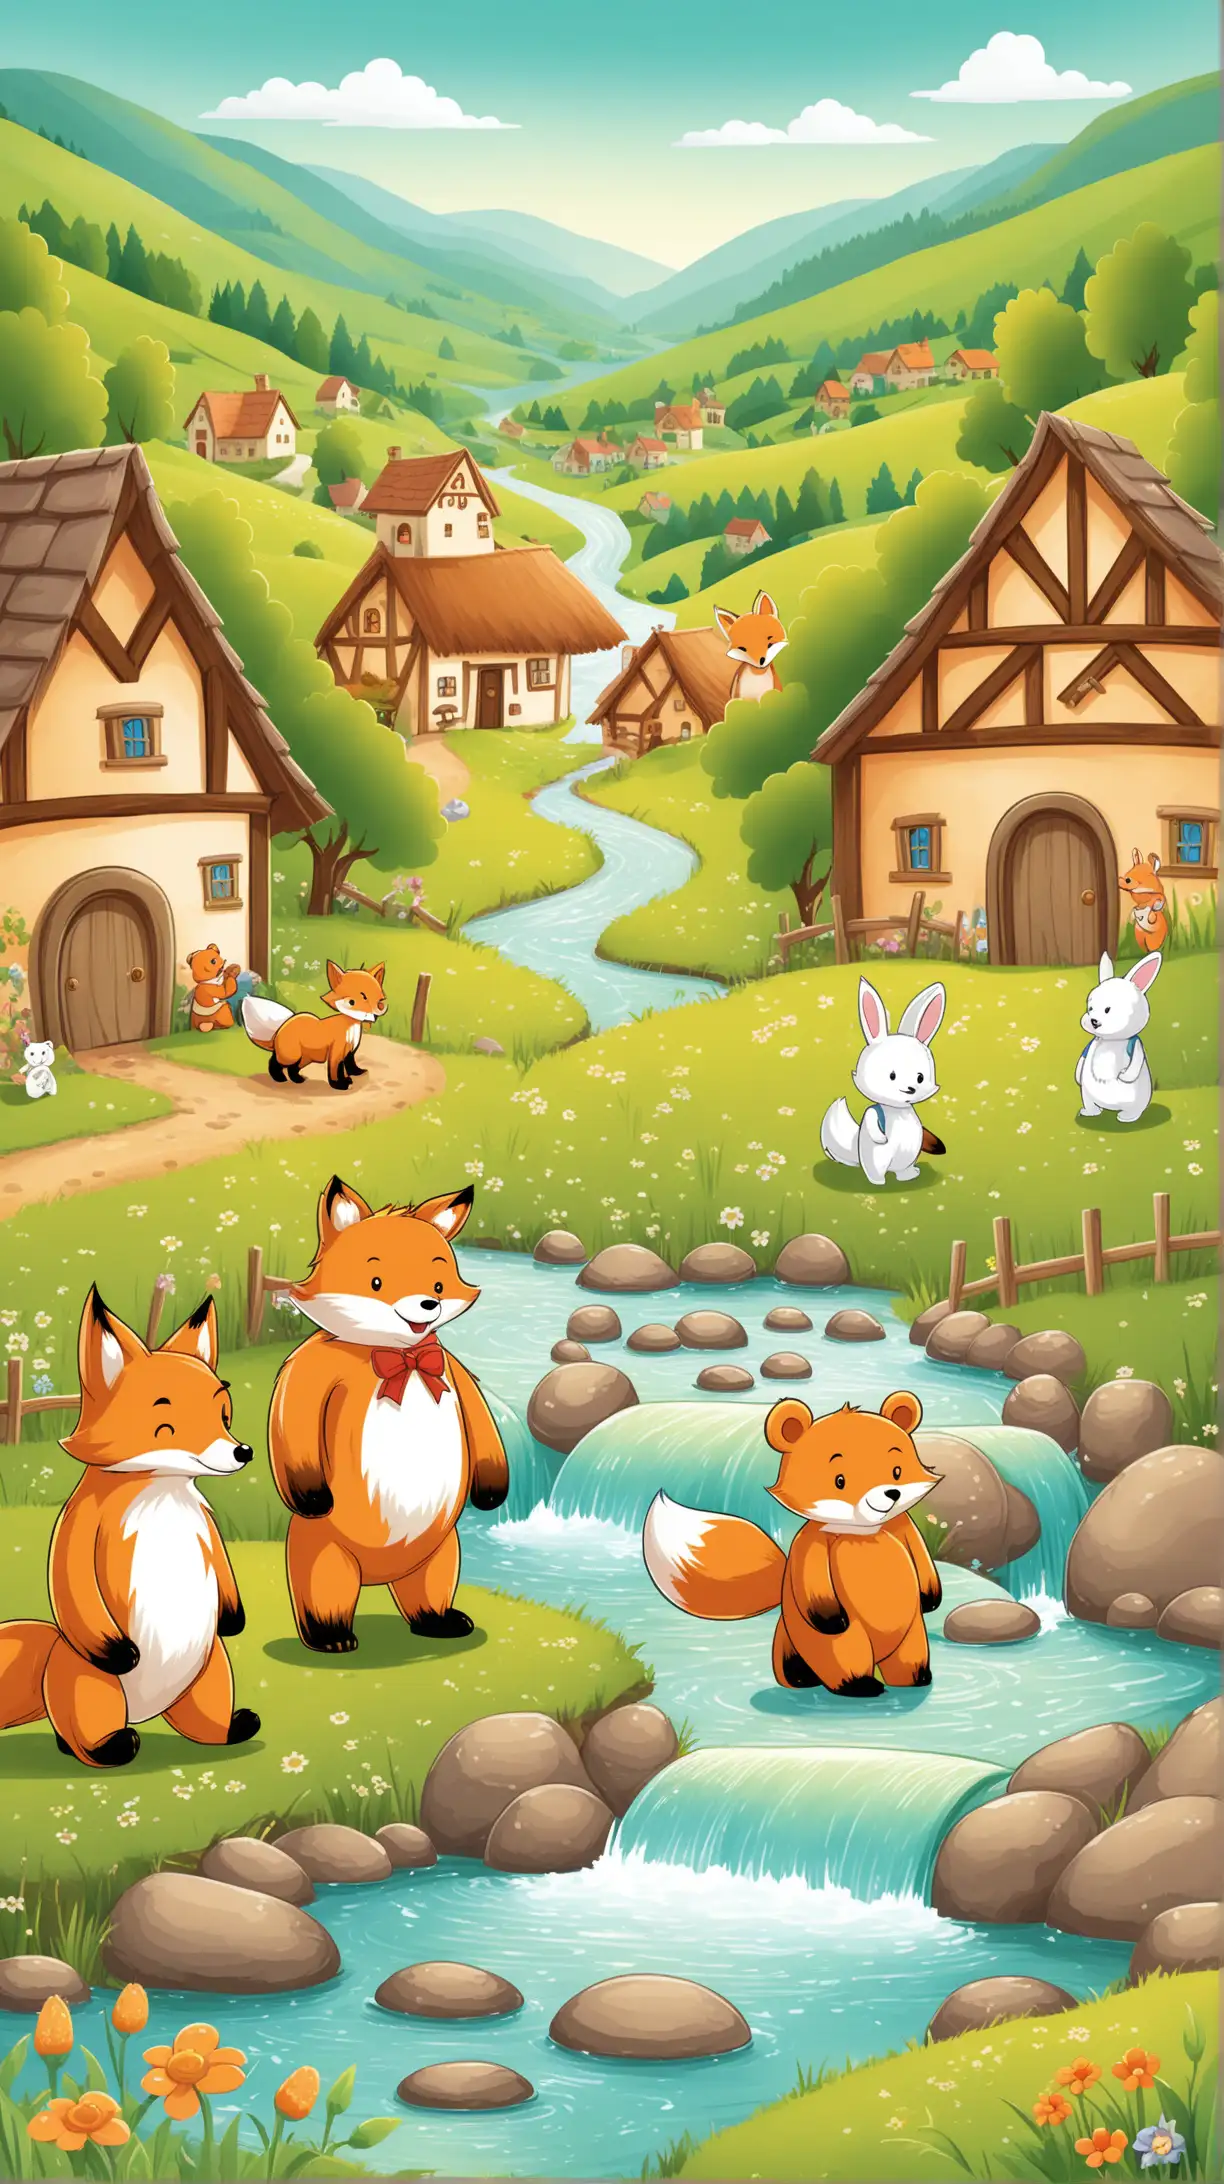 Adorable Cartoon Fox Rabbit and Bear Cub in Cozy Village Scene